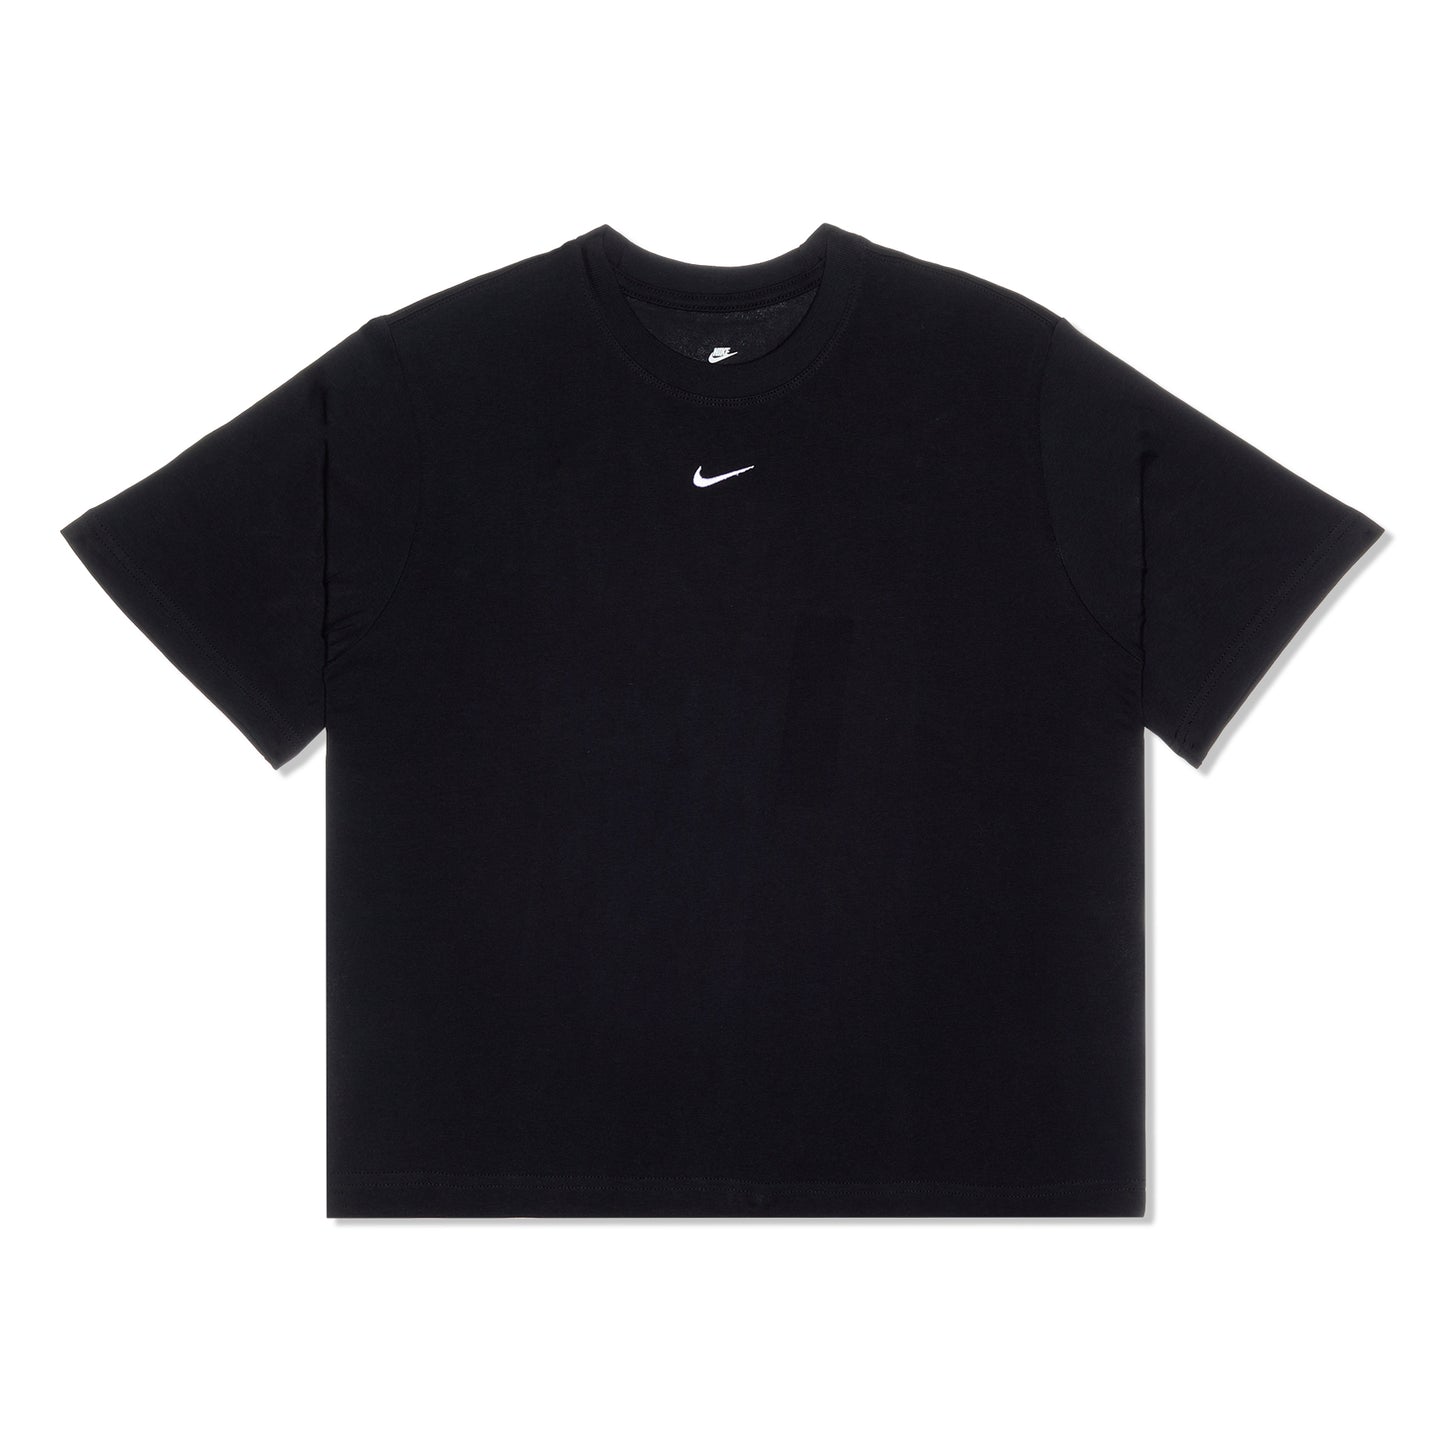 Nike Womens Sportswear (Black) Essential Concepts – T-Shirt